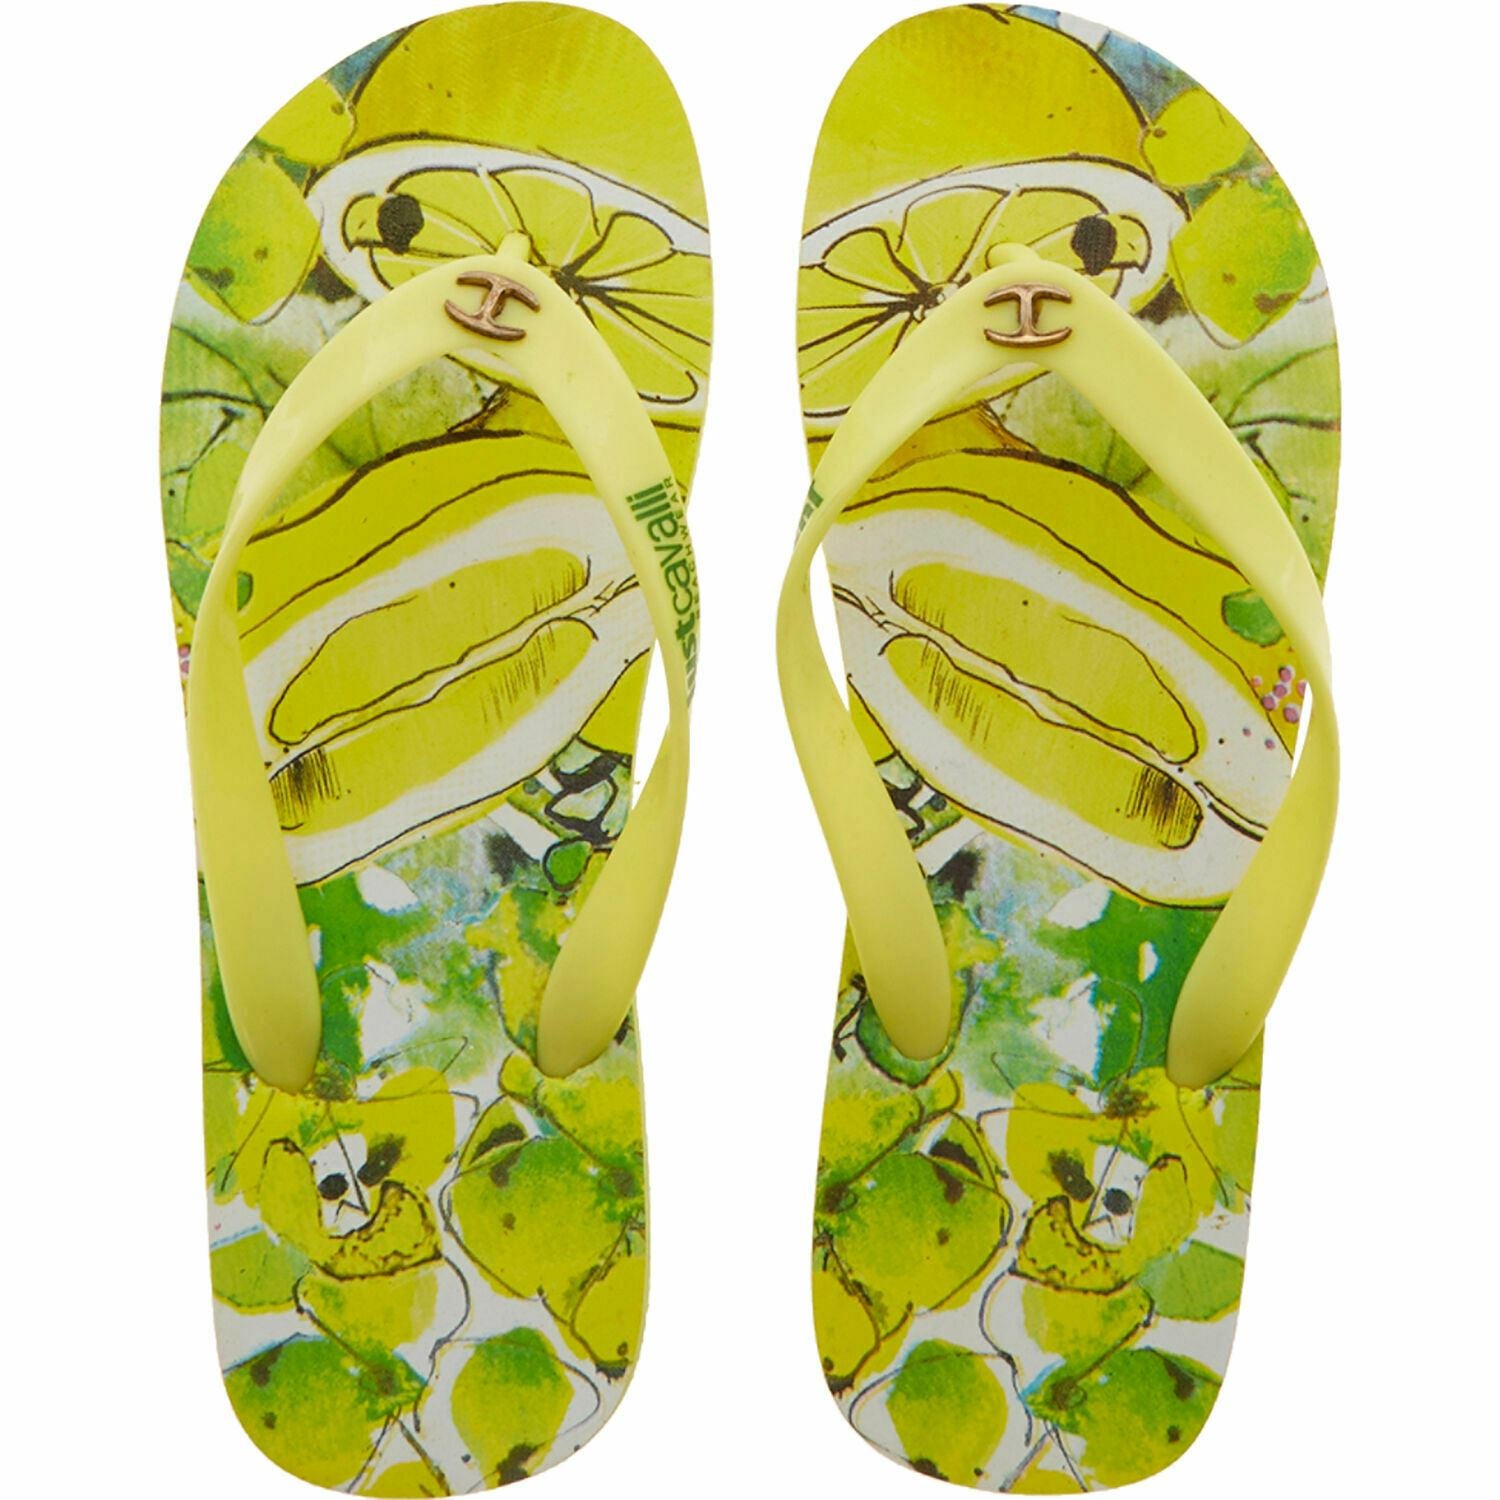 JUST CAVALLI Beachwear: Women's Summer Flip Flops / Sandals, Yellow, size UK 7